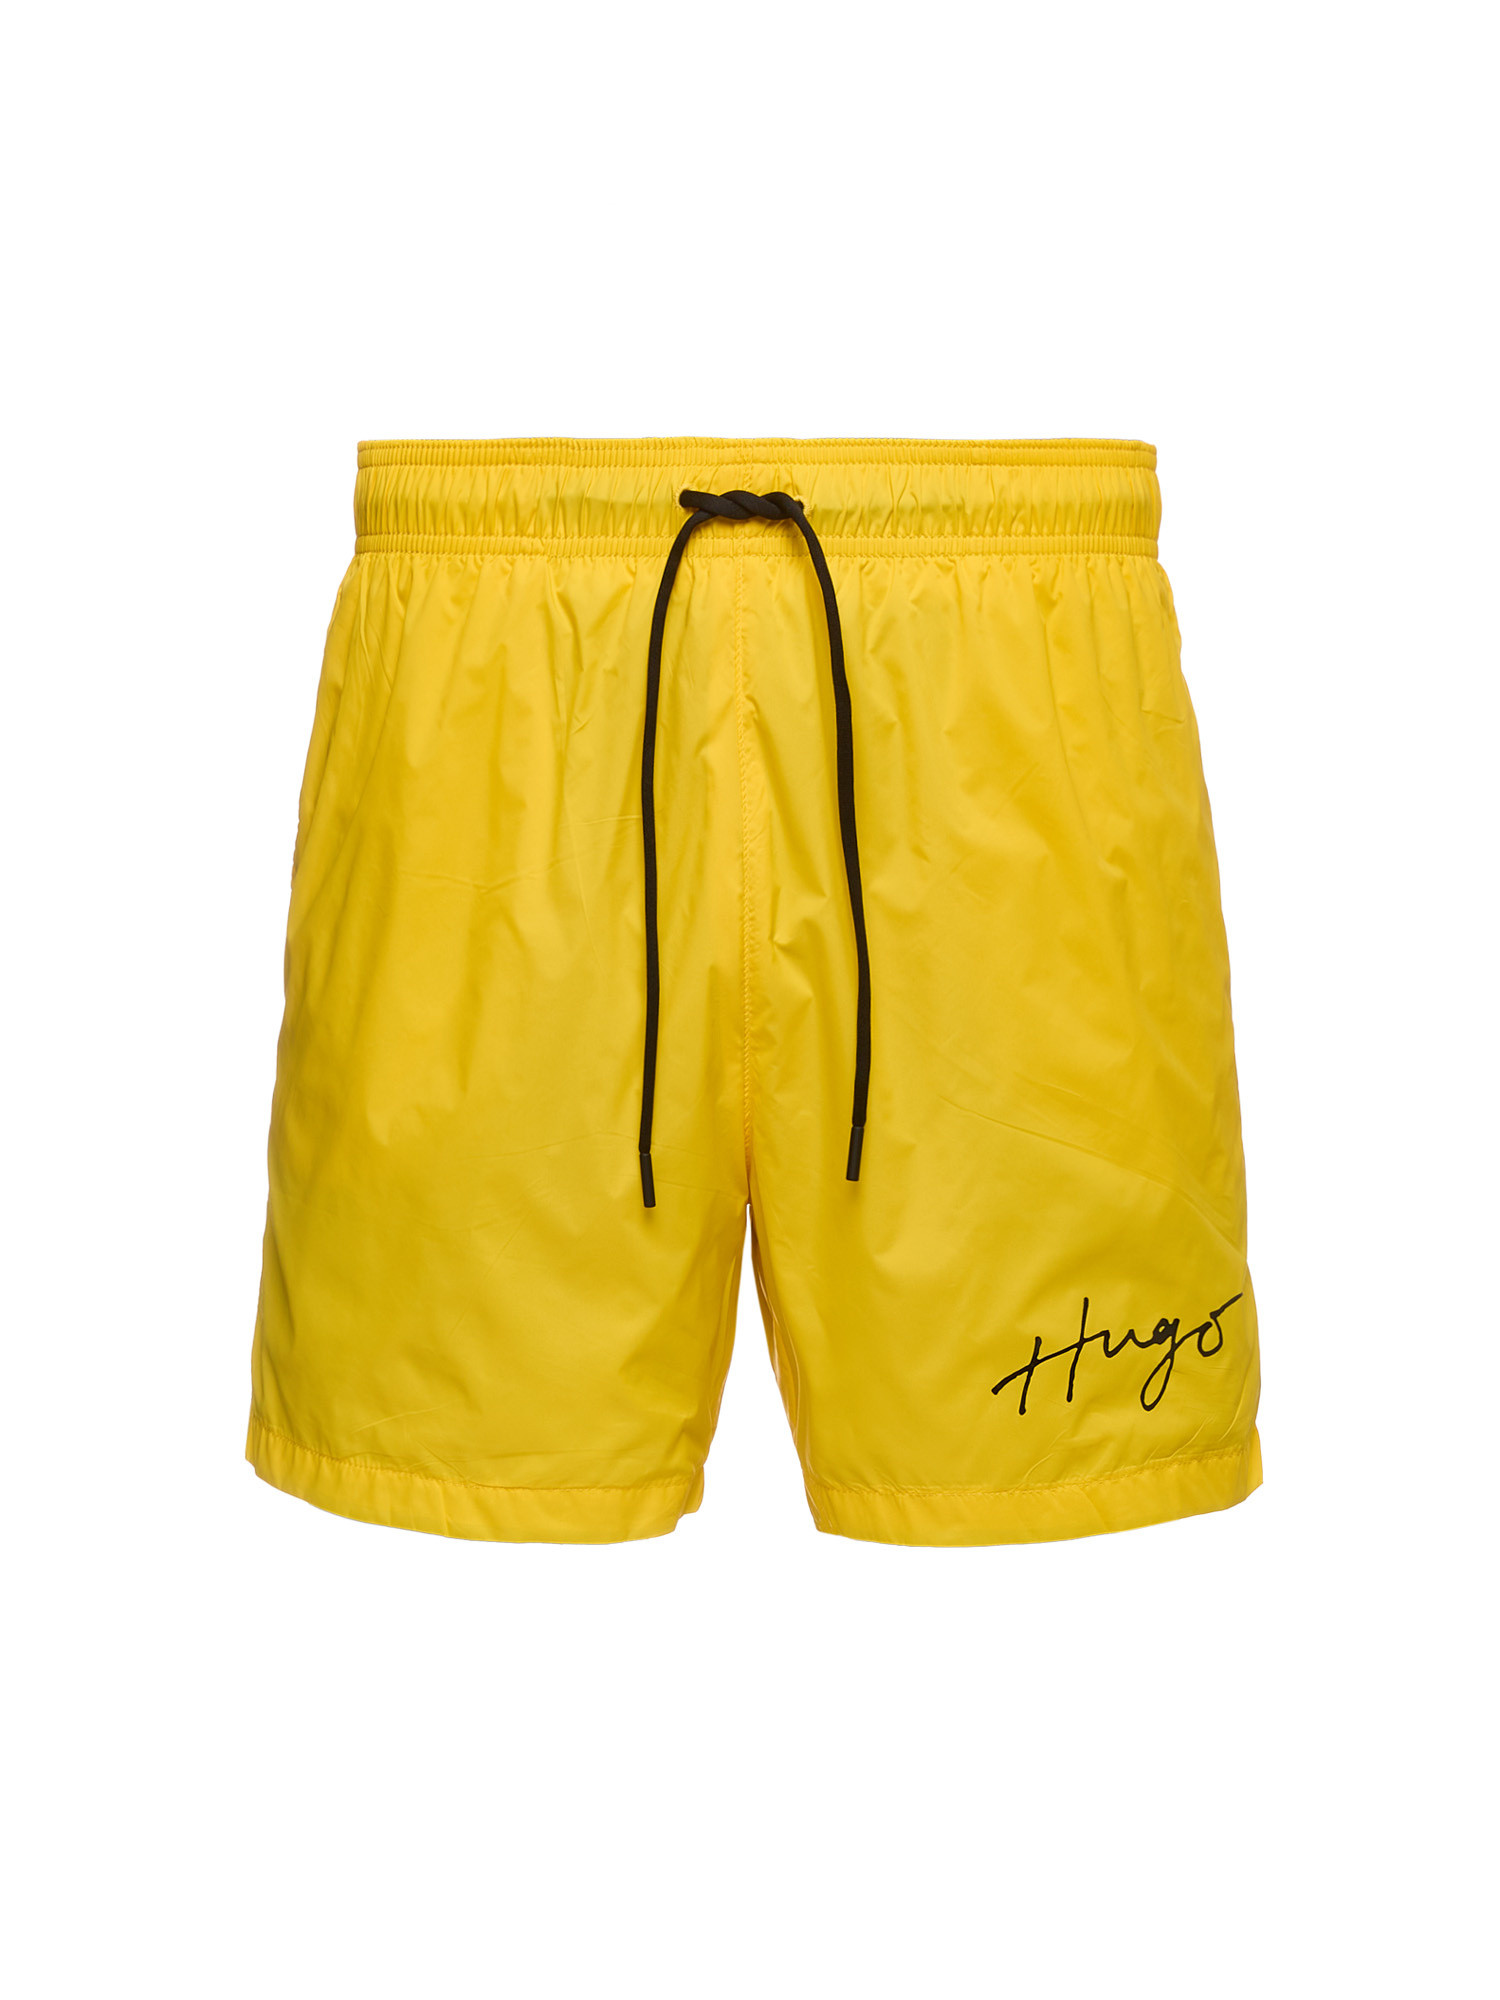 Hugo - Swim boxer with logo, Yellow, large image number 0